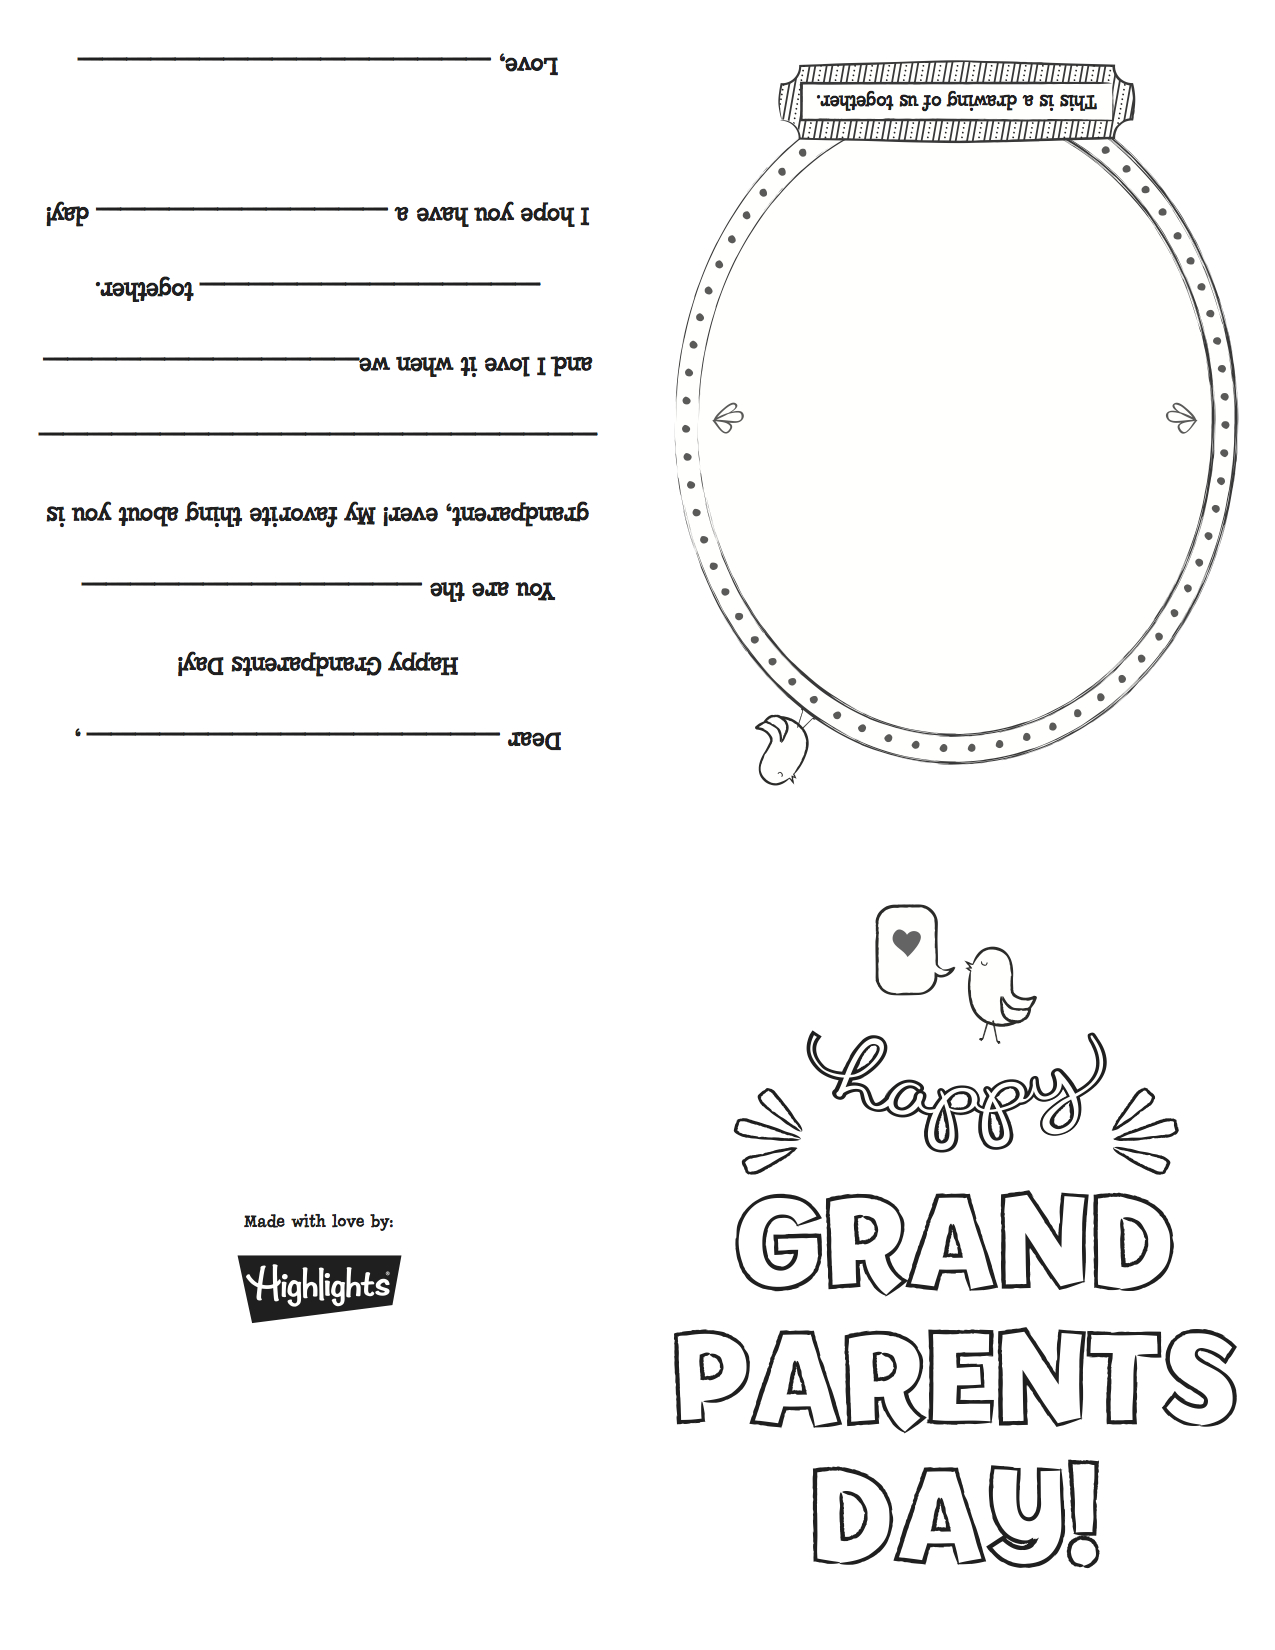 Grandparentsdaycard_Copy | Grandparents Day | Pinterest - Grandparents Day Cards Printable Free